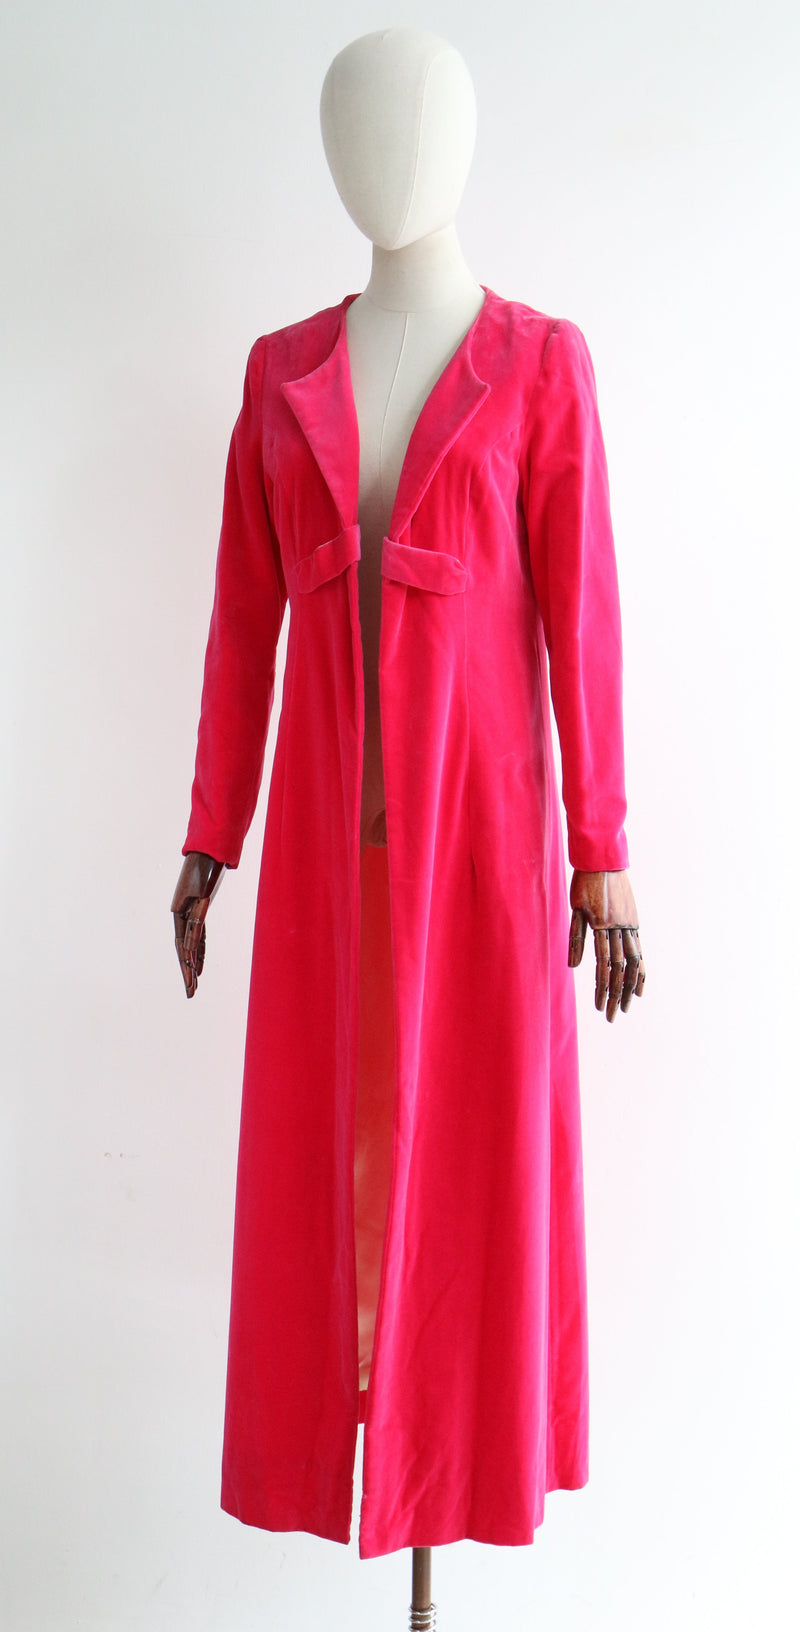 "Schiaparelli Pink Velvet" Vintage 1960's Hot Pink Velvet Evening Coat UK 12 US 8